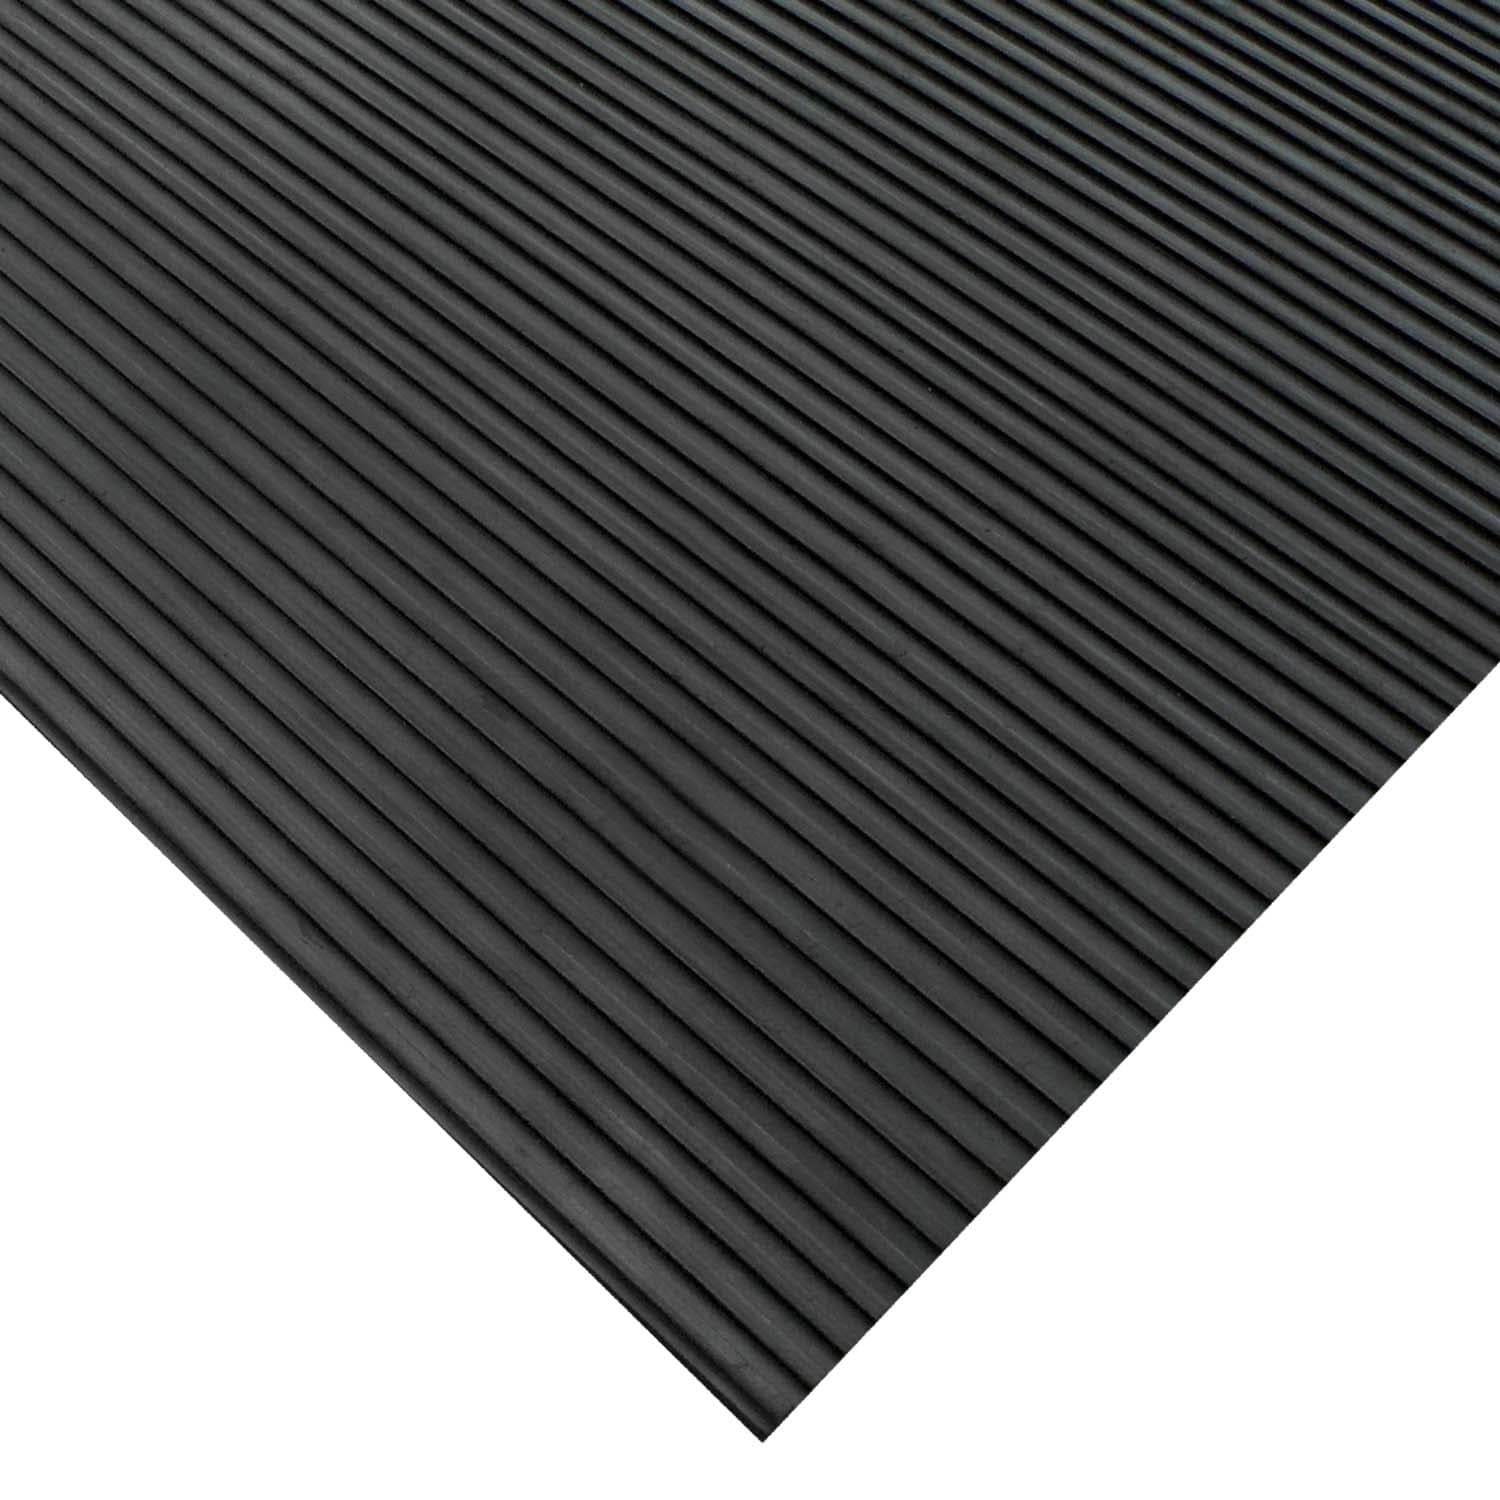 Black Anti-slip Vinyl Non Slip Fabric Rubber Non Skid Rubber Treated Fabric  58 wide Sold By The Yard